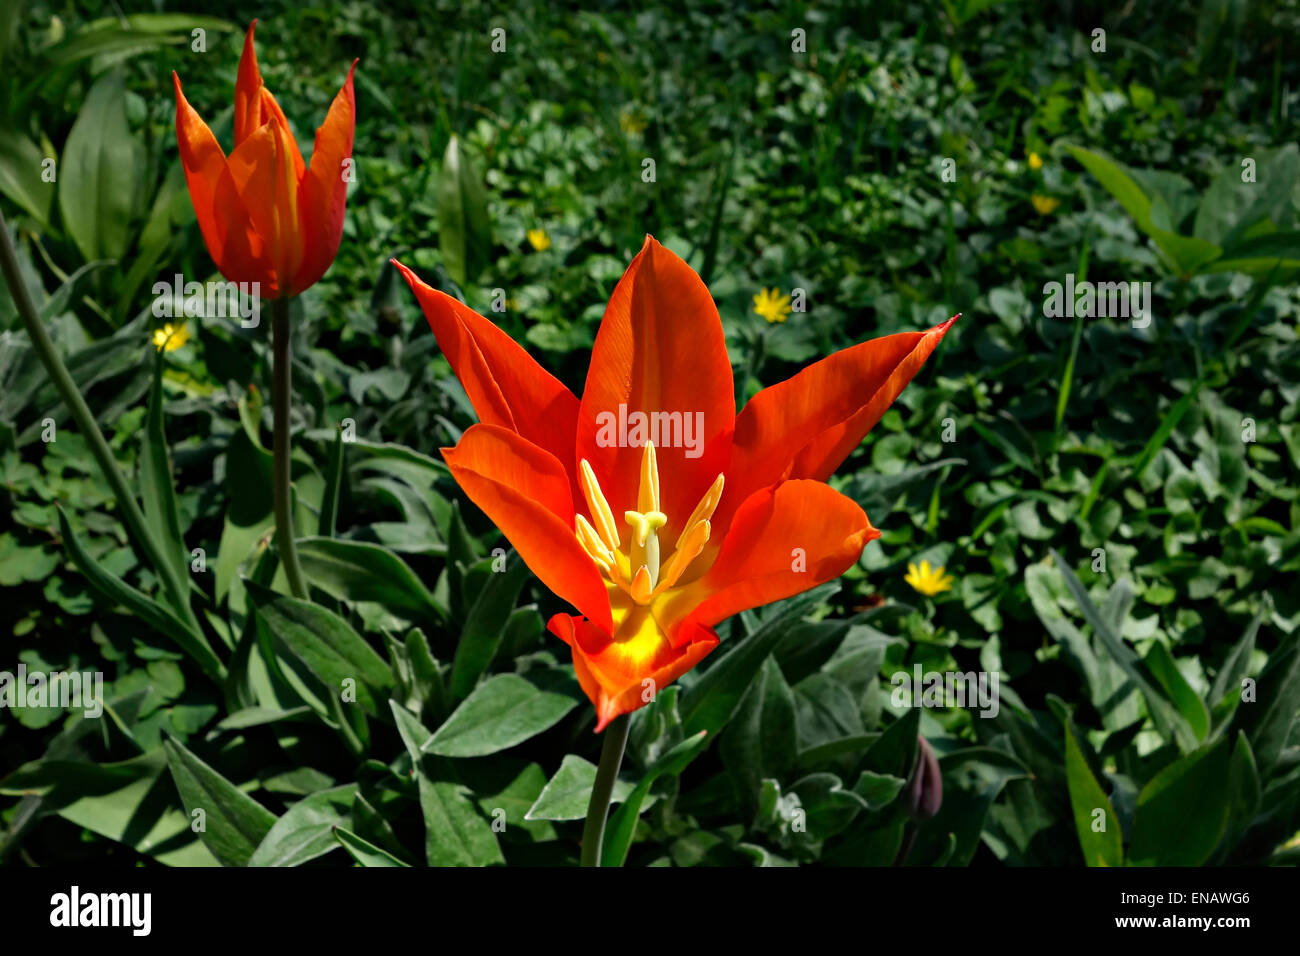 Red Tulip flowers (Triumph Tulpe Frisco) in garden Stock Photo